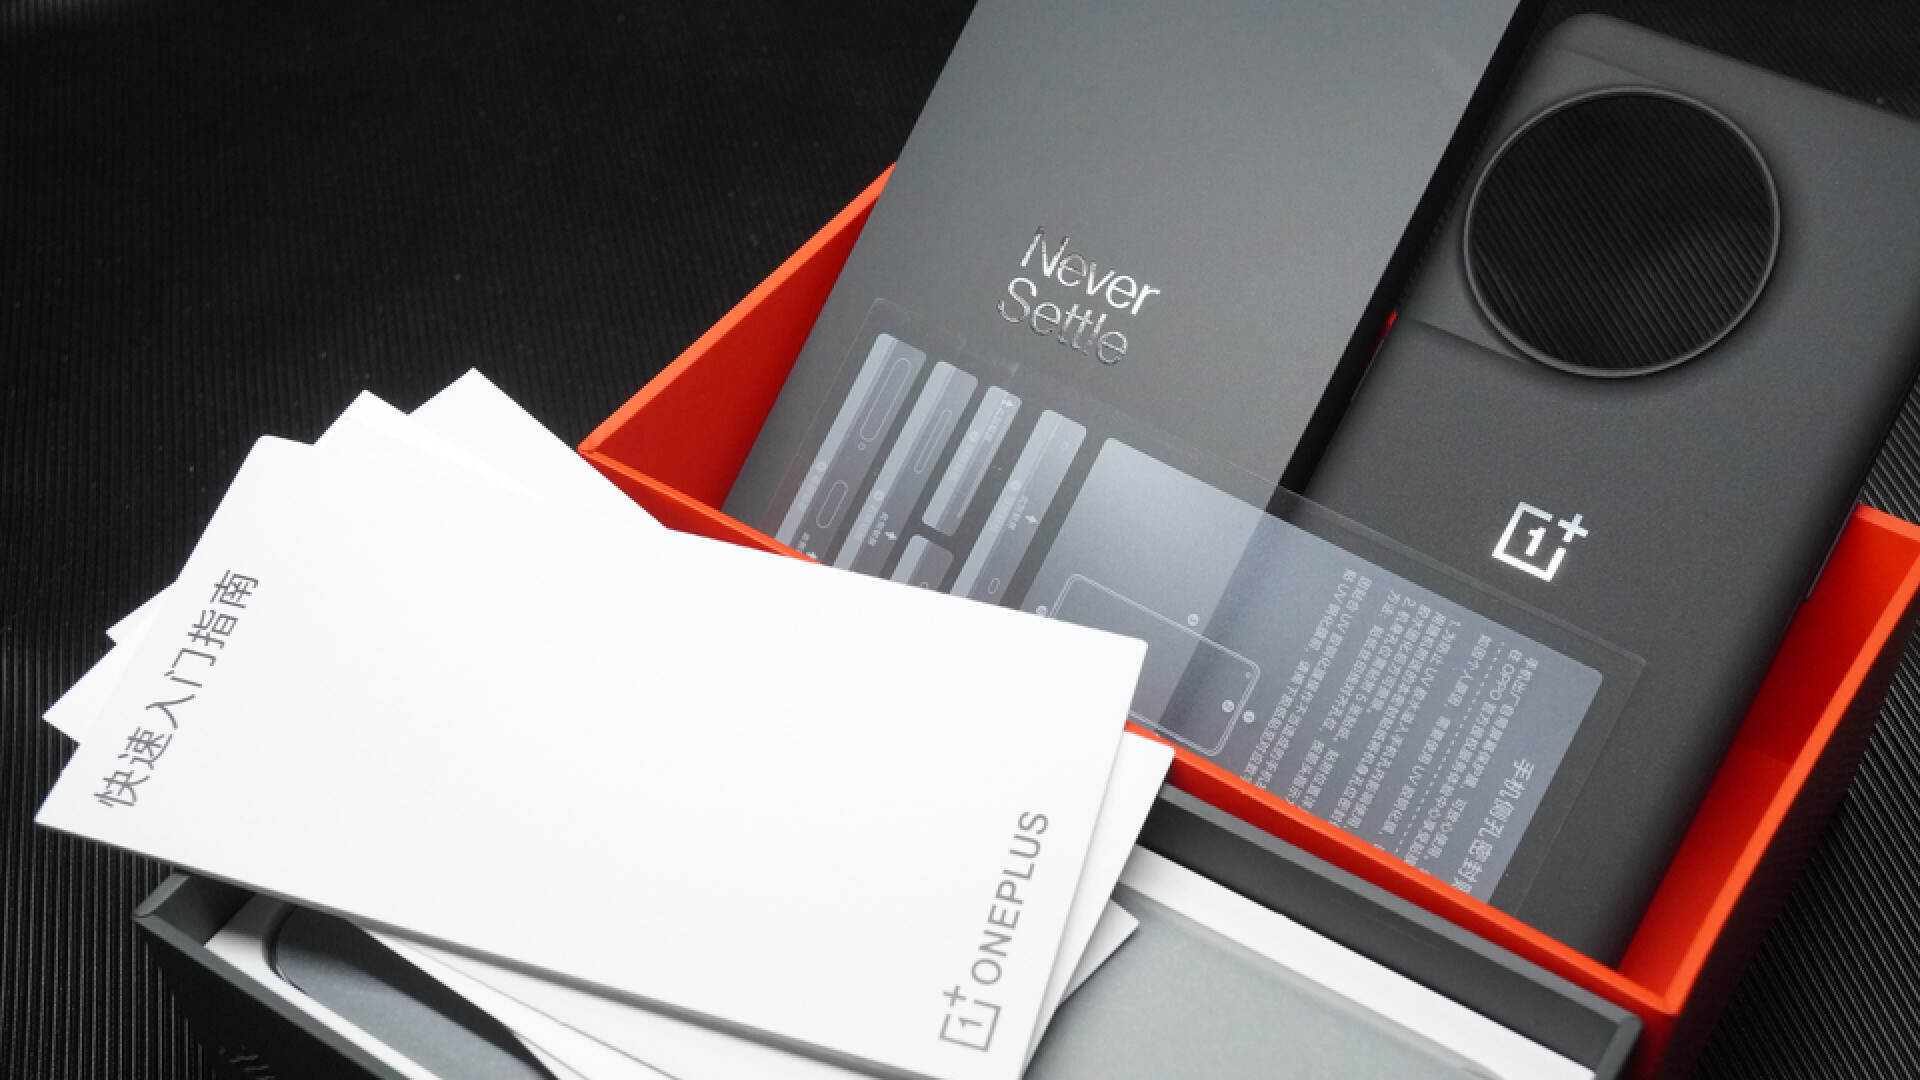 OnePlus 7 Pro 12GB 256GB ネビュラブルー 超美品